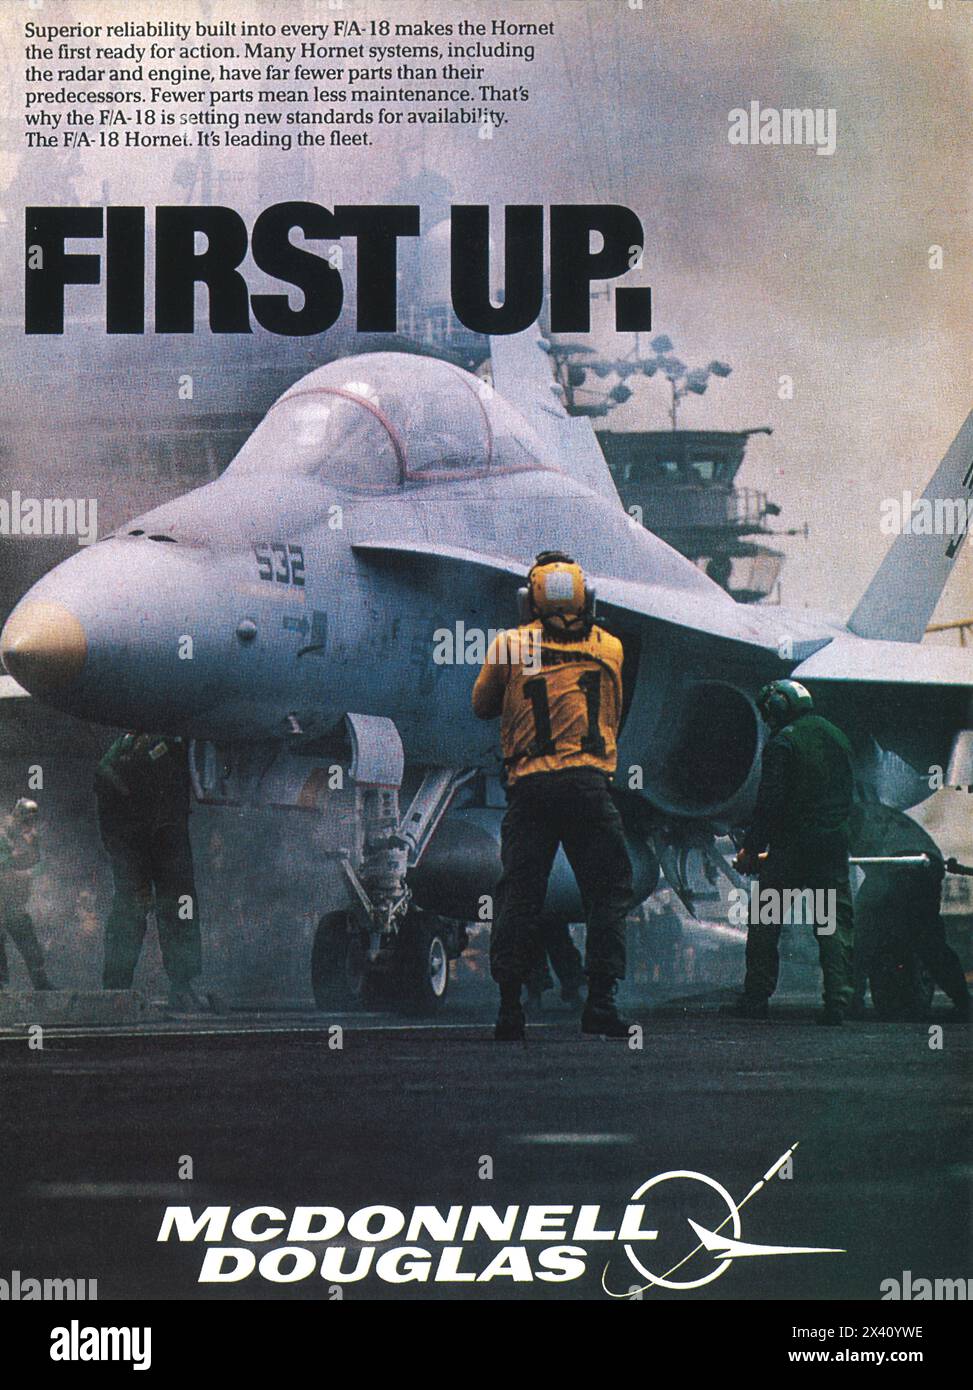 1986 Mcdonnell Douglas F/A-18 Hornet Ad Stock Photo